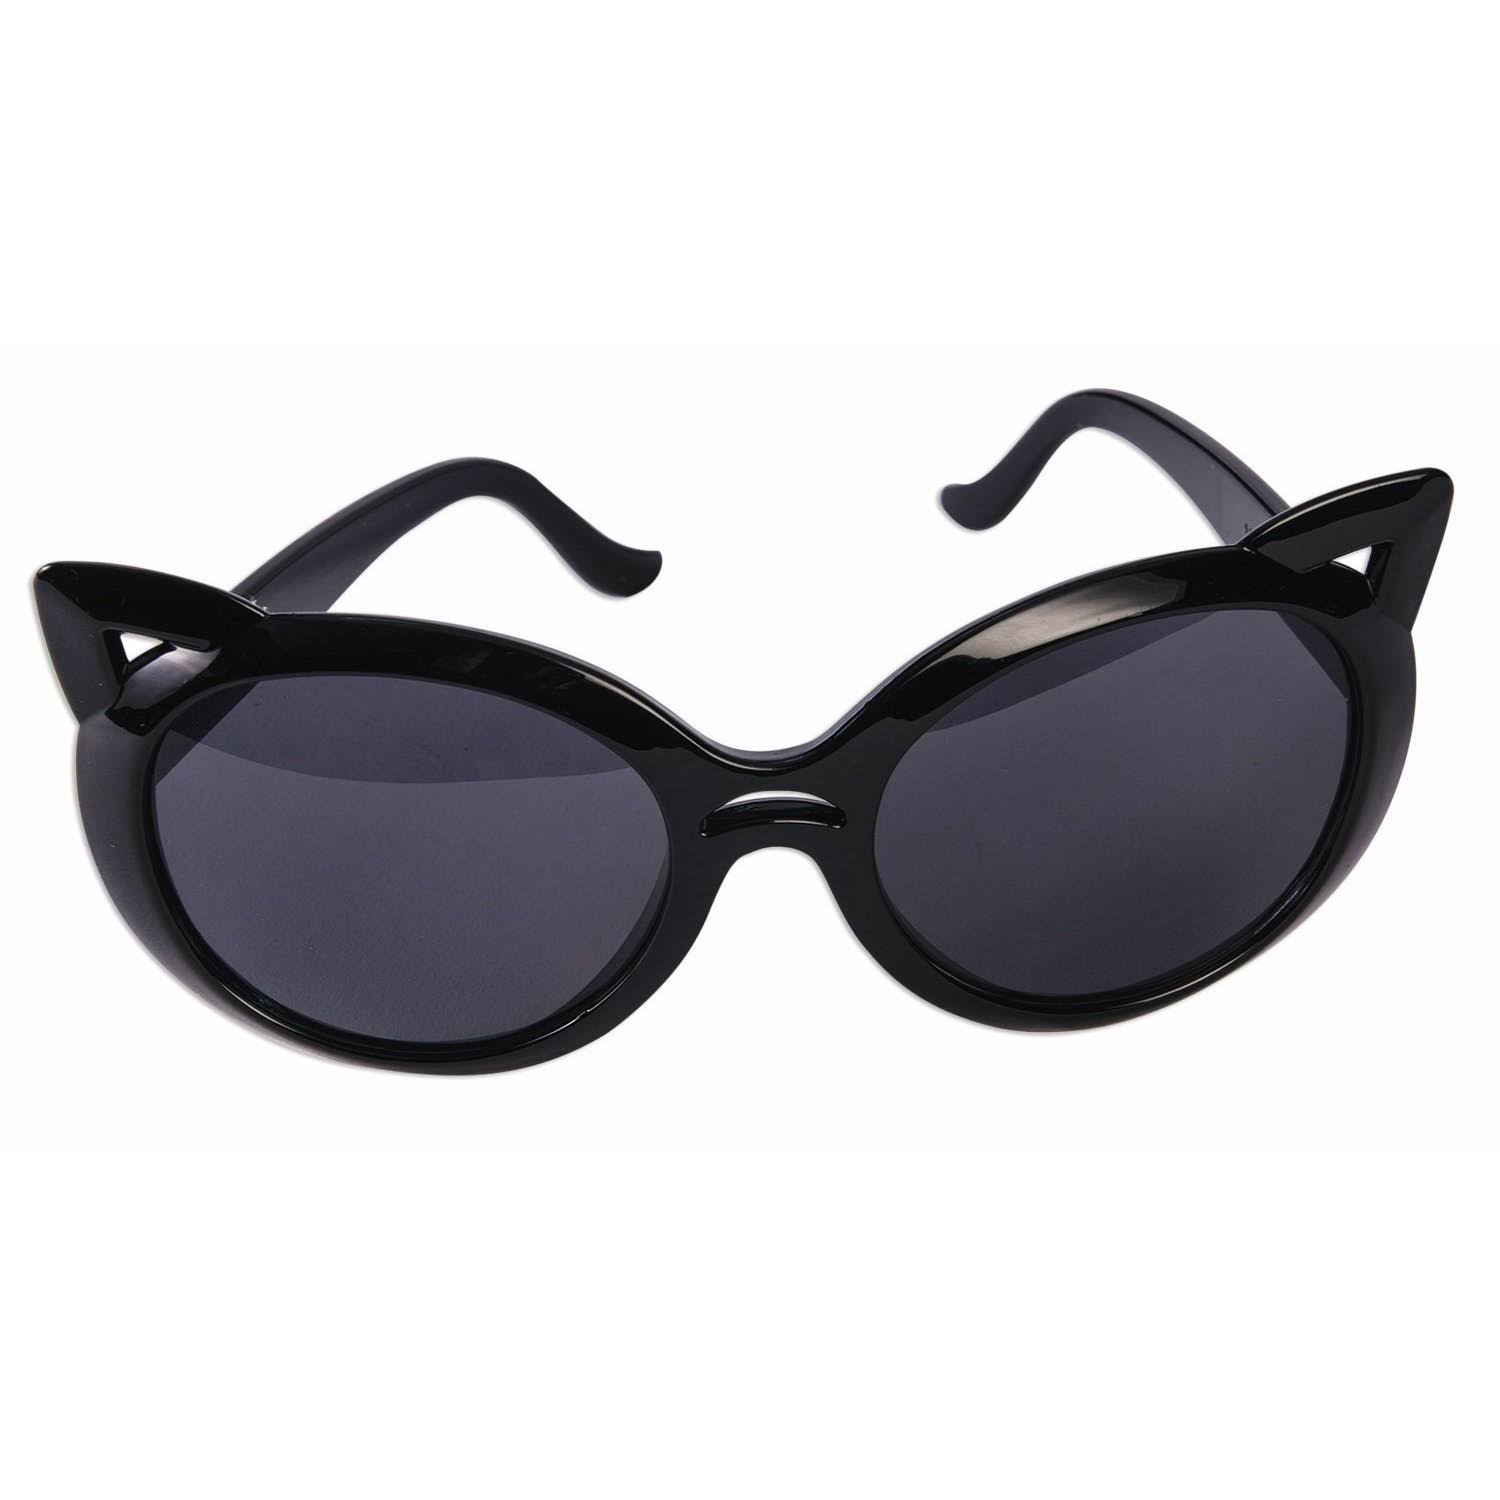 Forum Novelties Adult Women's Cat Glasses Costume Accessory - Black